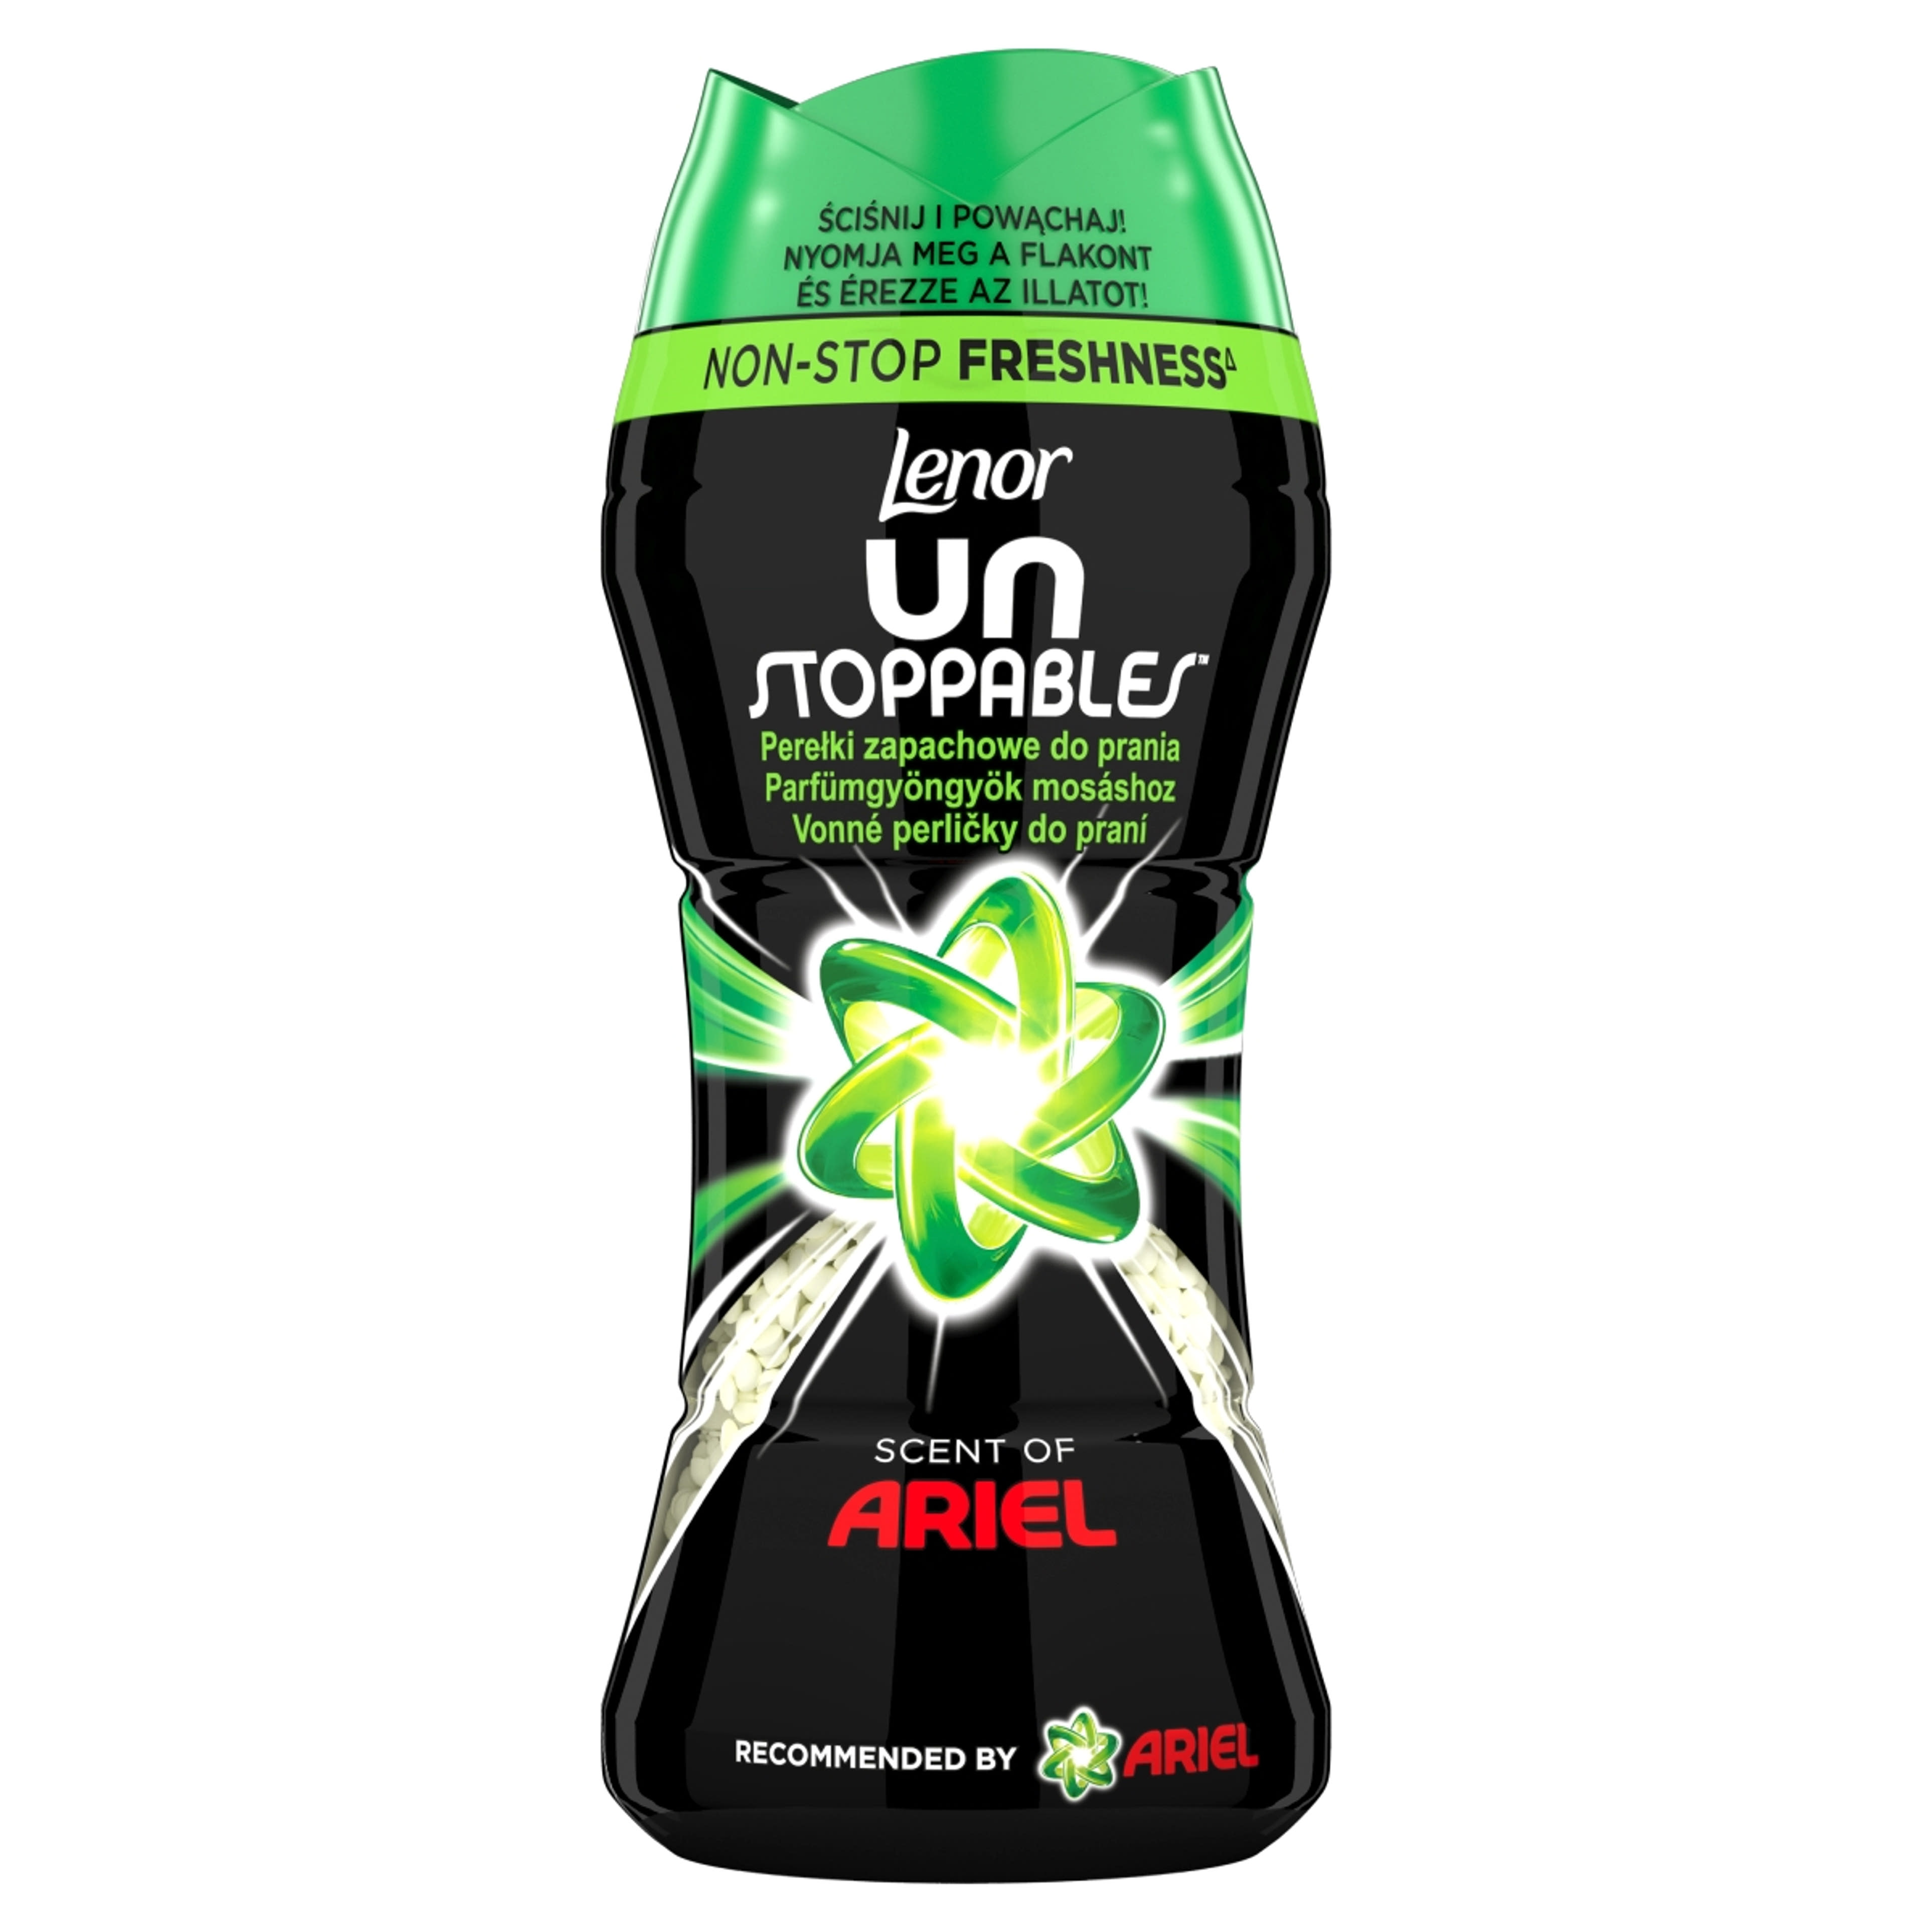 Lenor Unstoppables Ariel parfümgyöngyök - 210 g-1